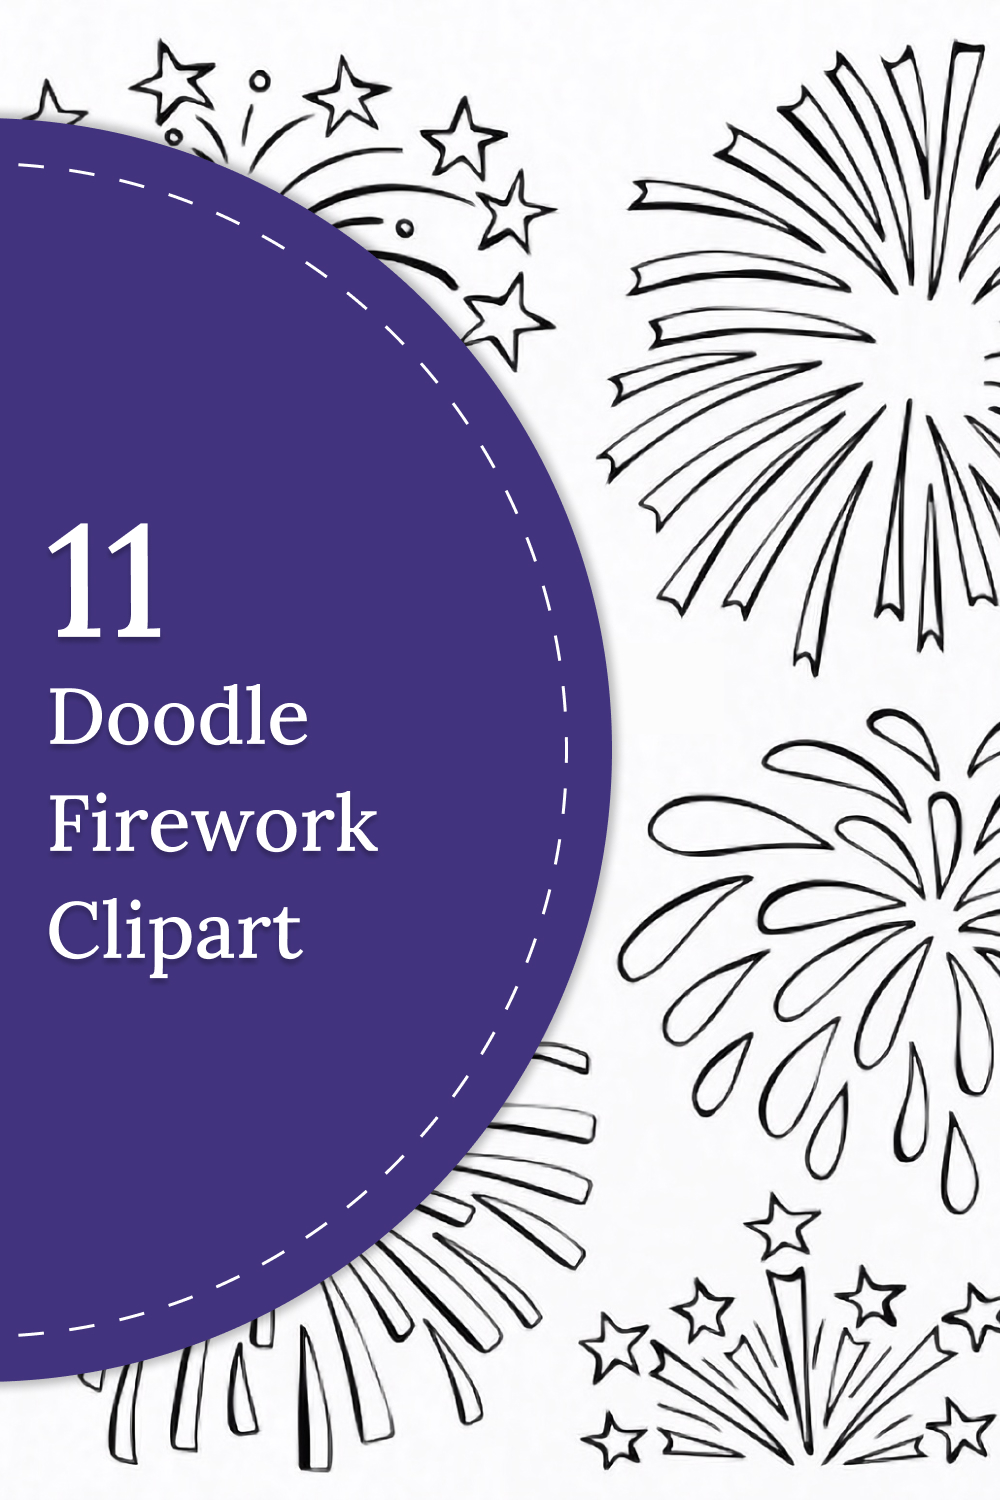 Doodle Firework Clipart - Pinterest.